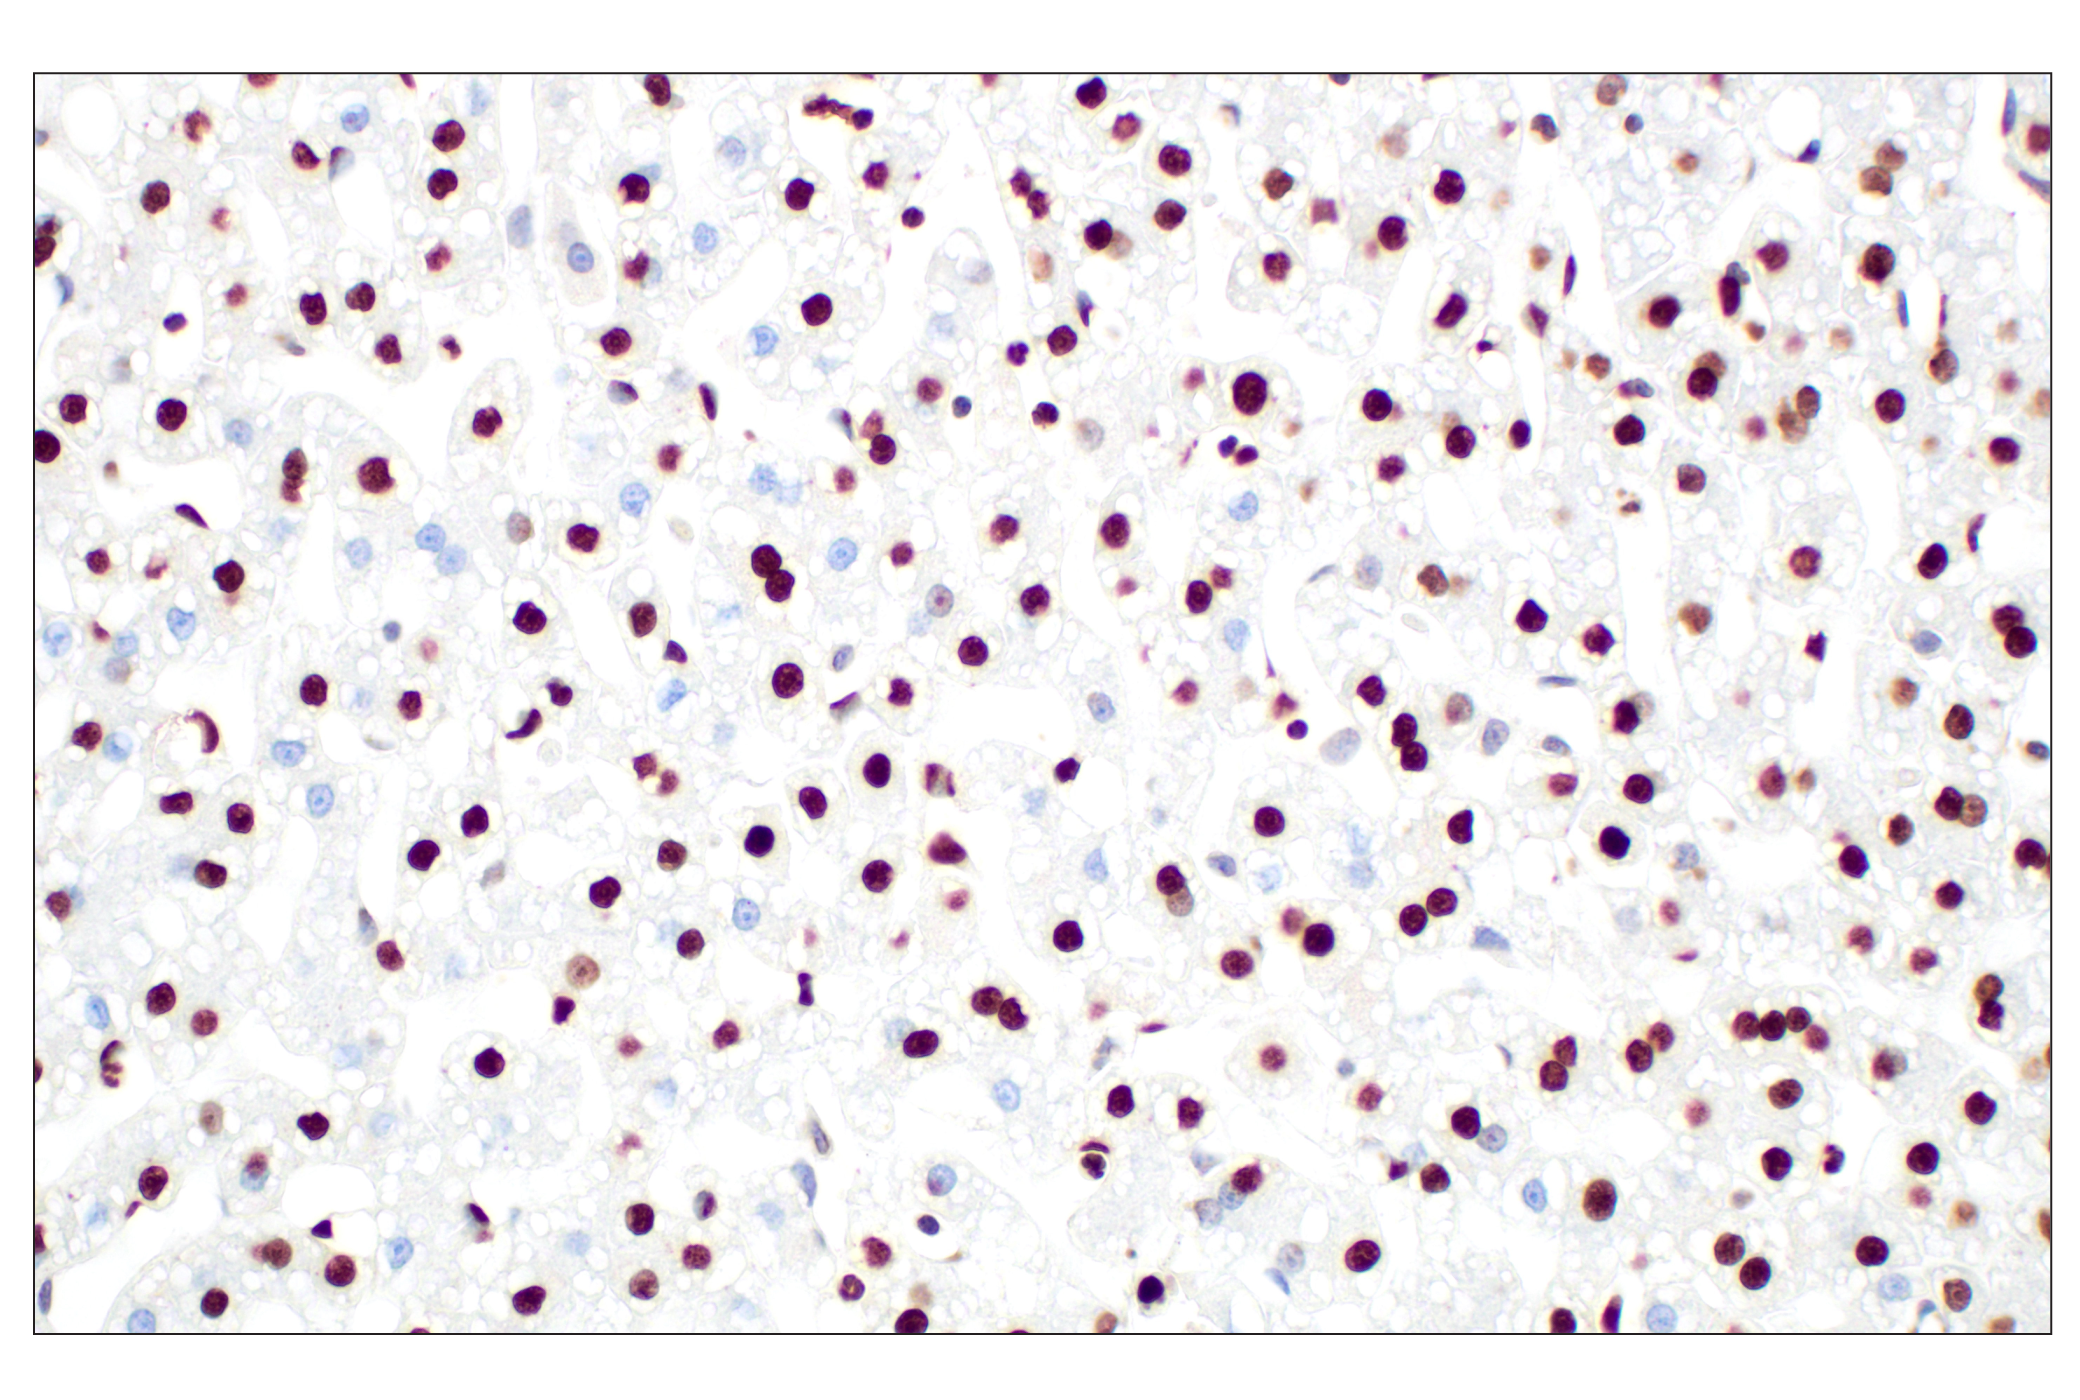  Image 11: PhosphoPlus® Histone H3 (Ser10) Antibody Duet